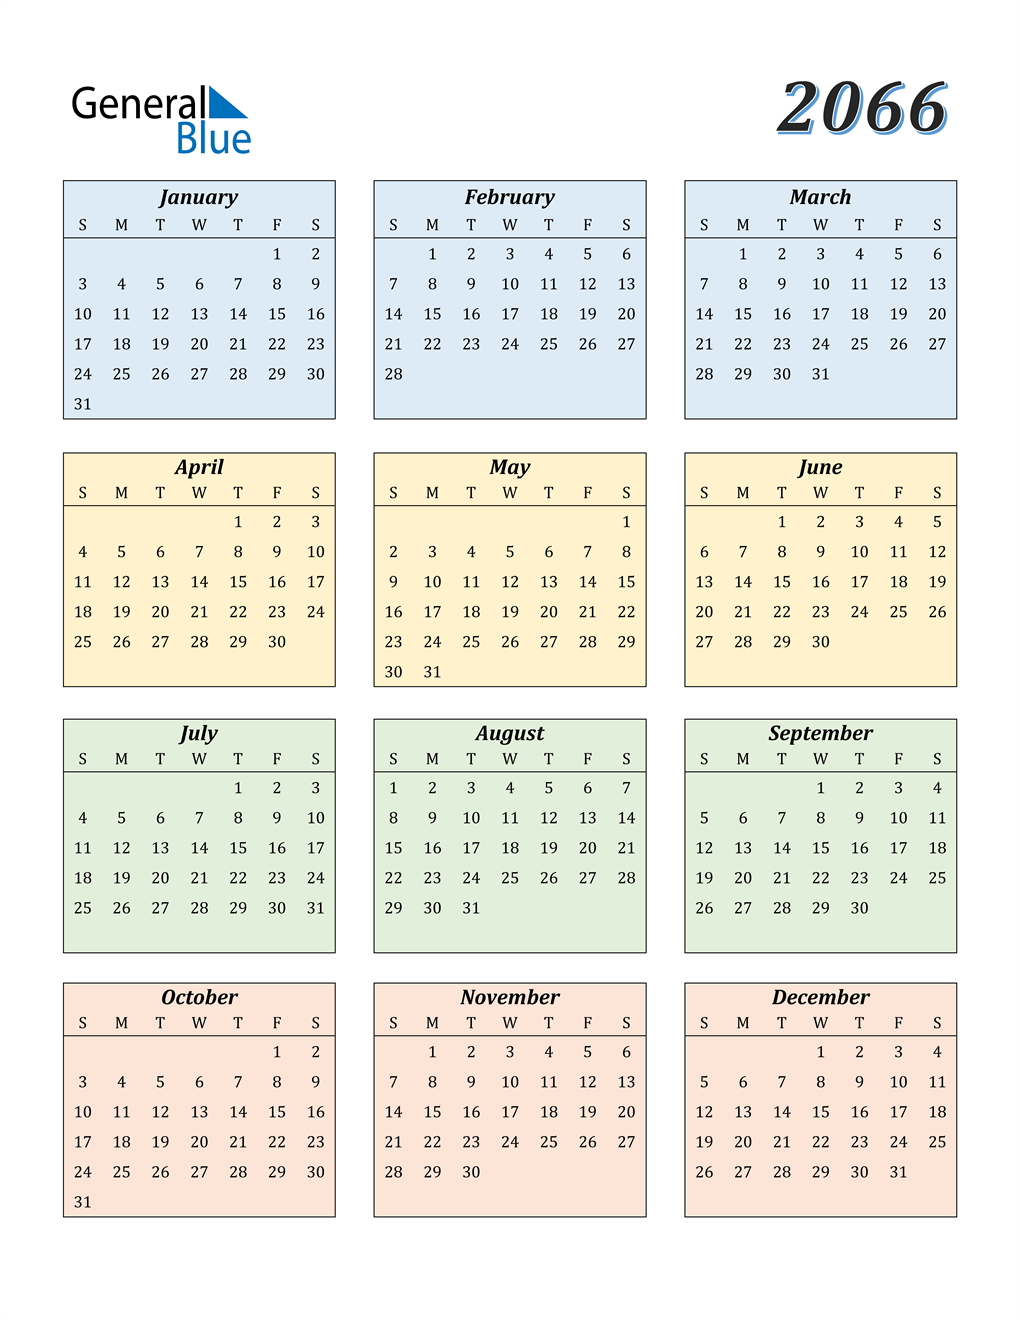 how to edit a calendar template on powerpoint mac